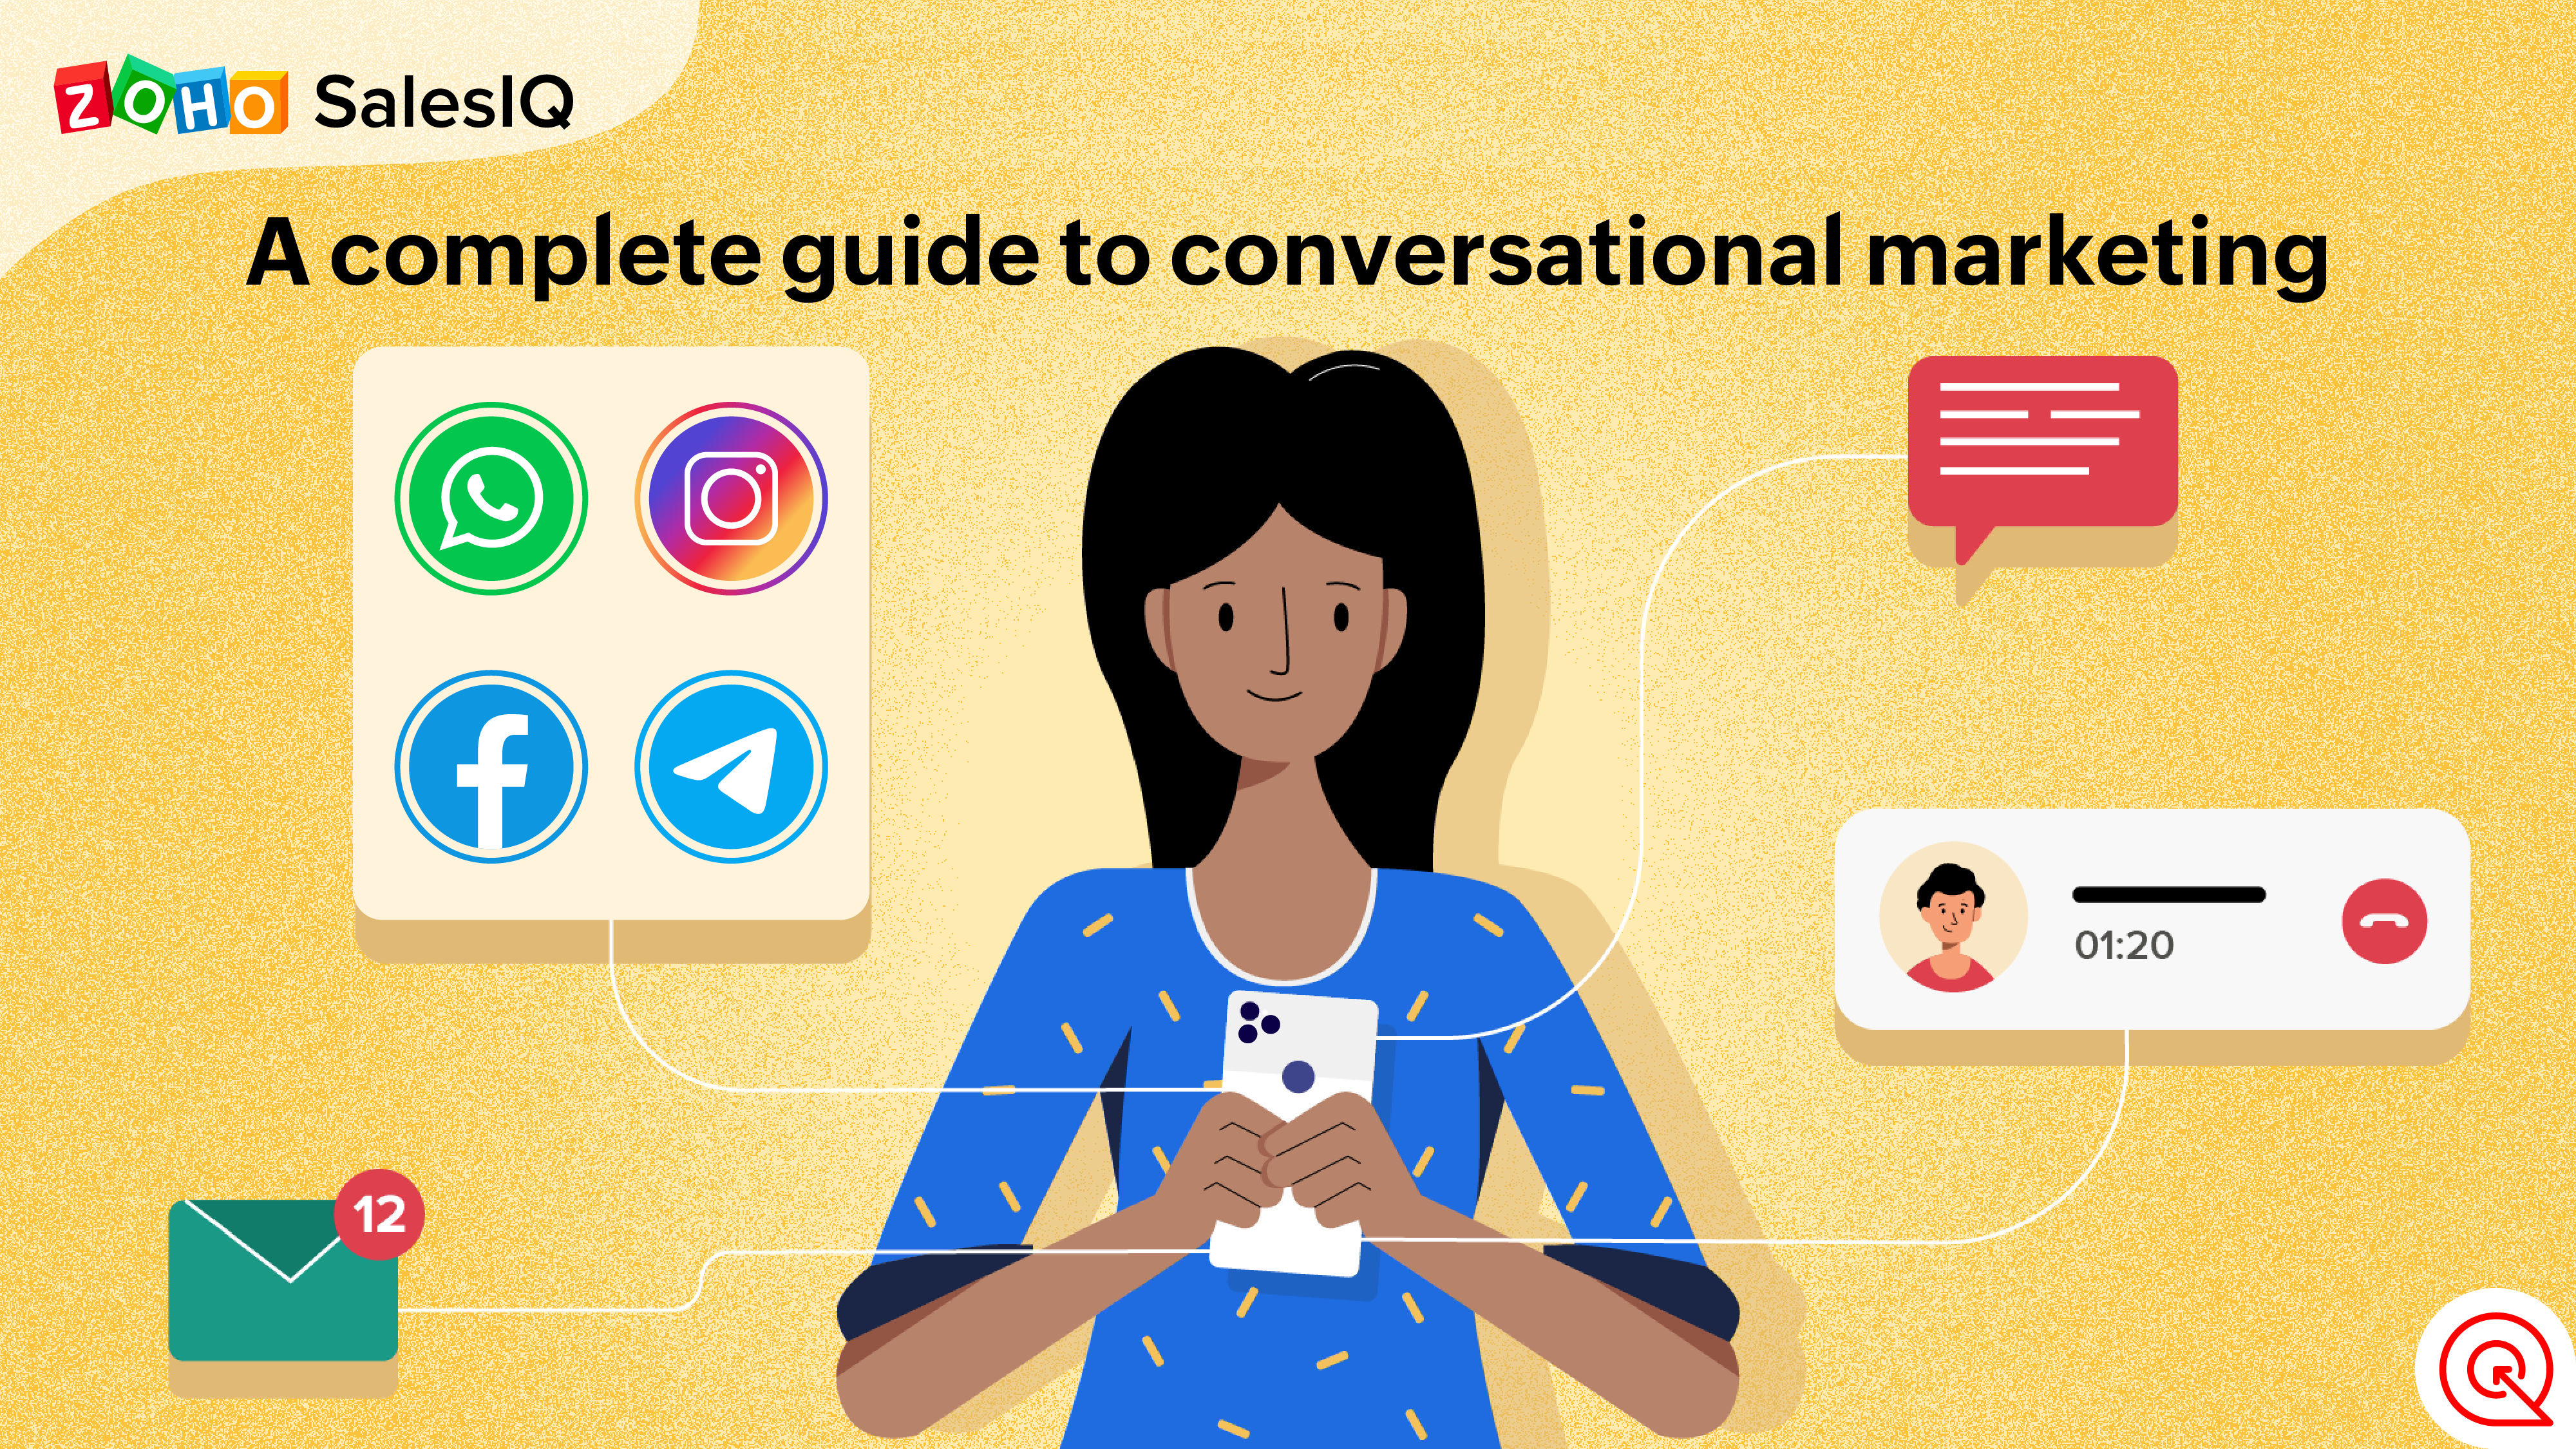 A complete guide to conversational marketing - Zoho SalesIQ